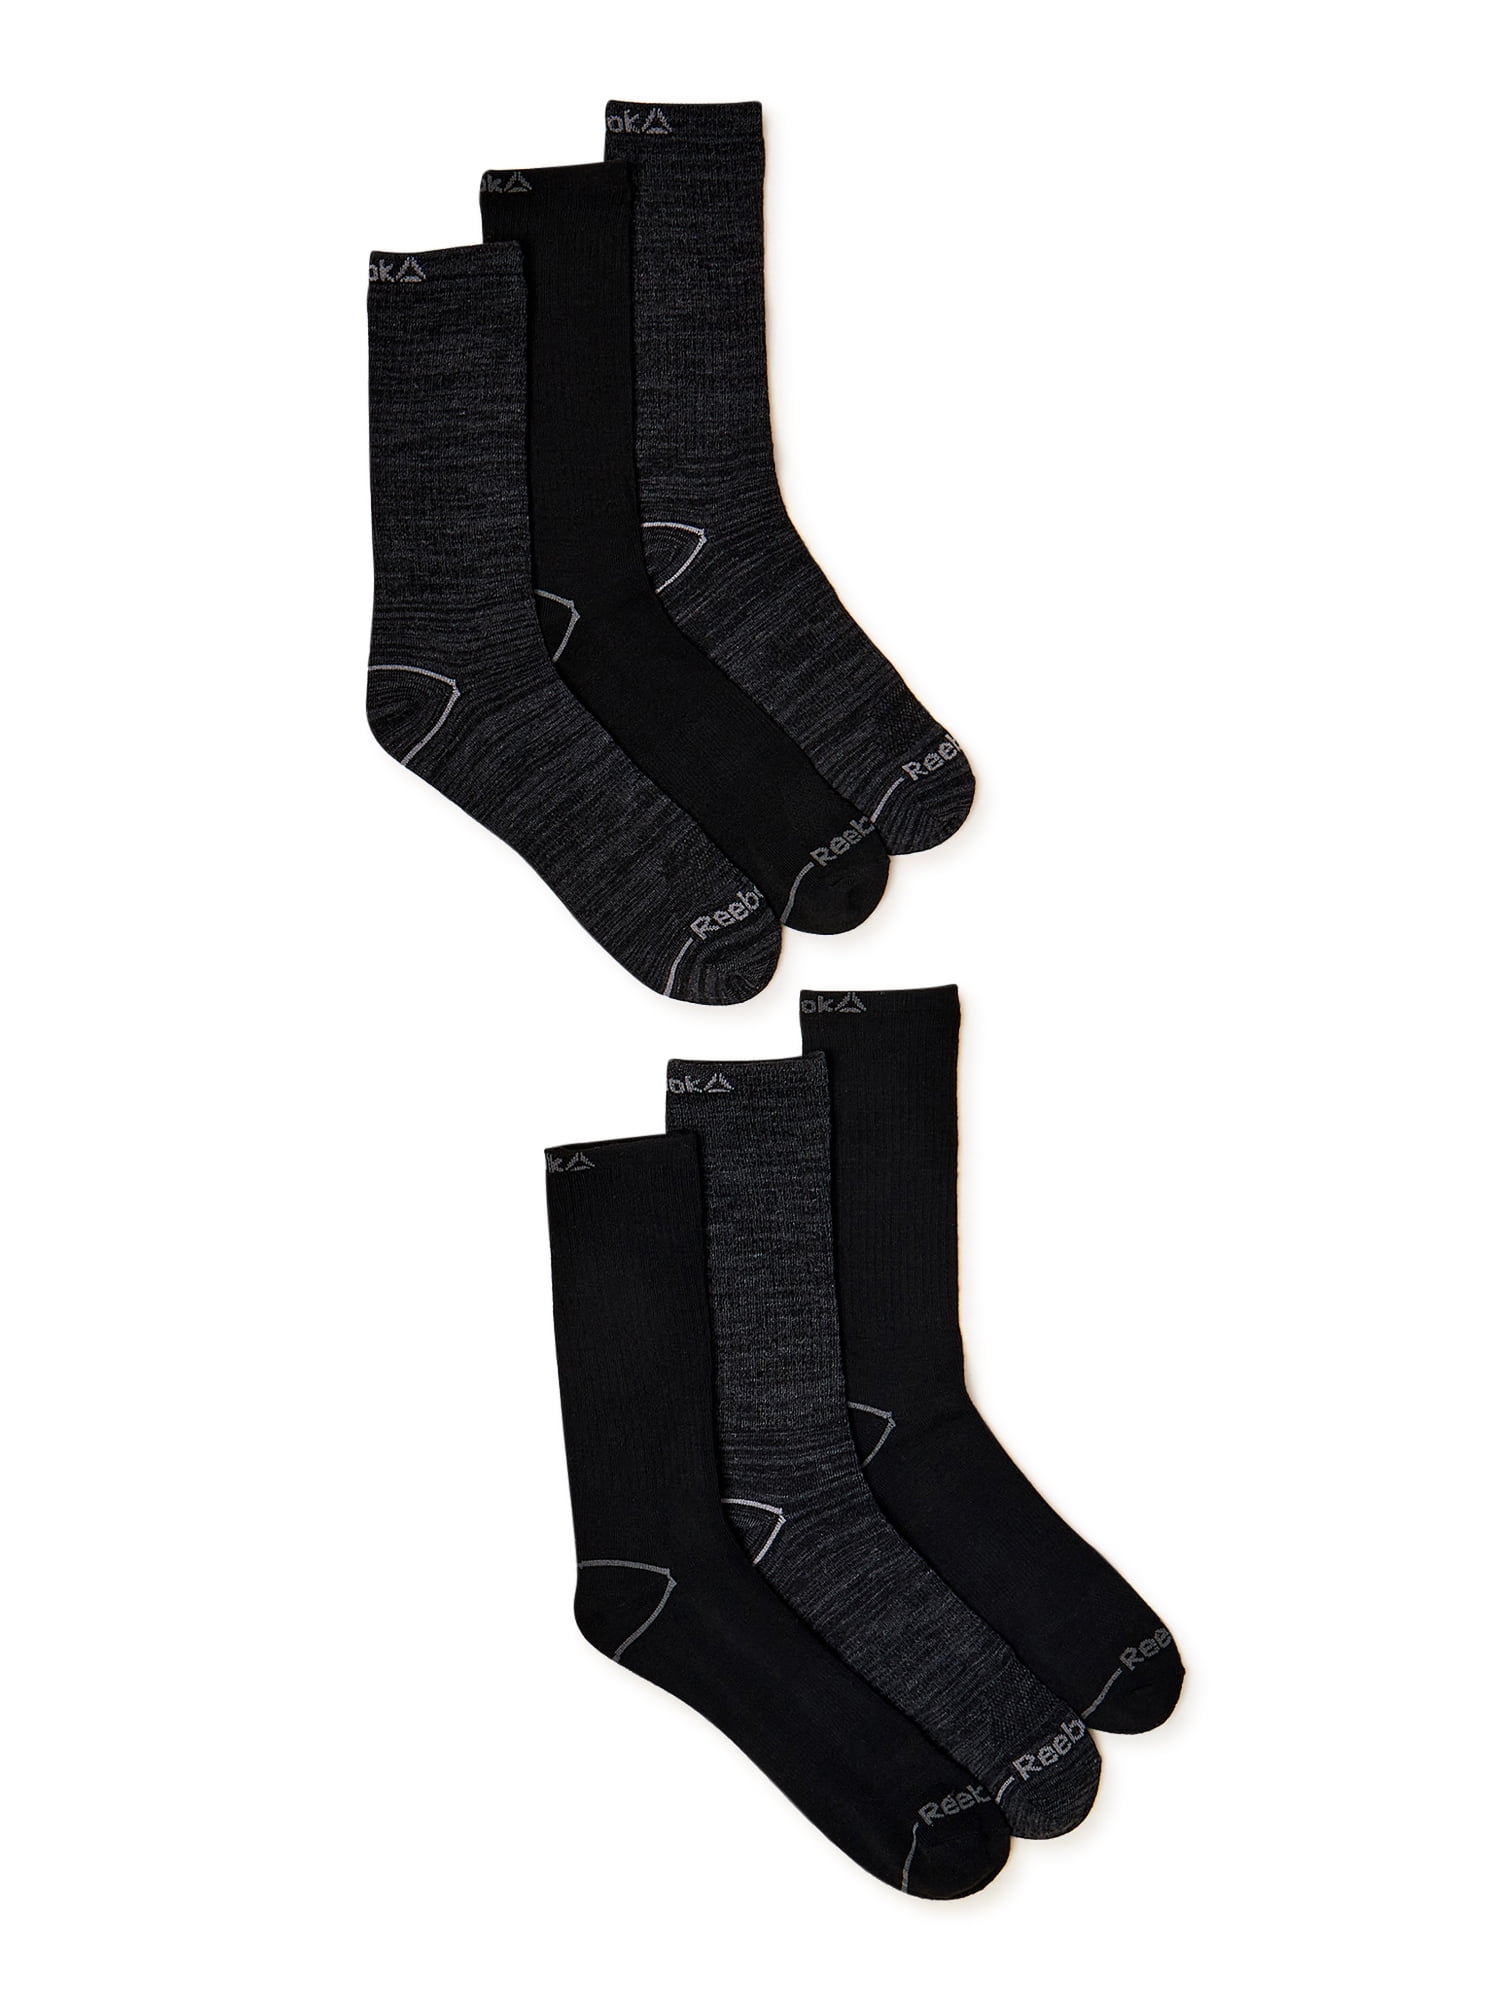 Reebok Men's Pro Series Flatknit Crew Socks, 6-Pack